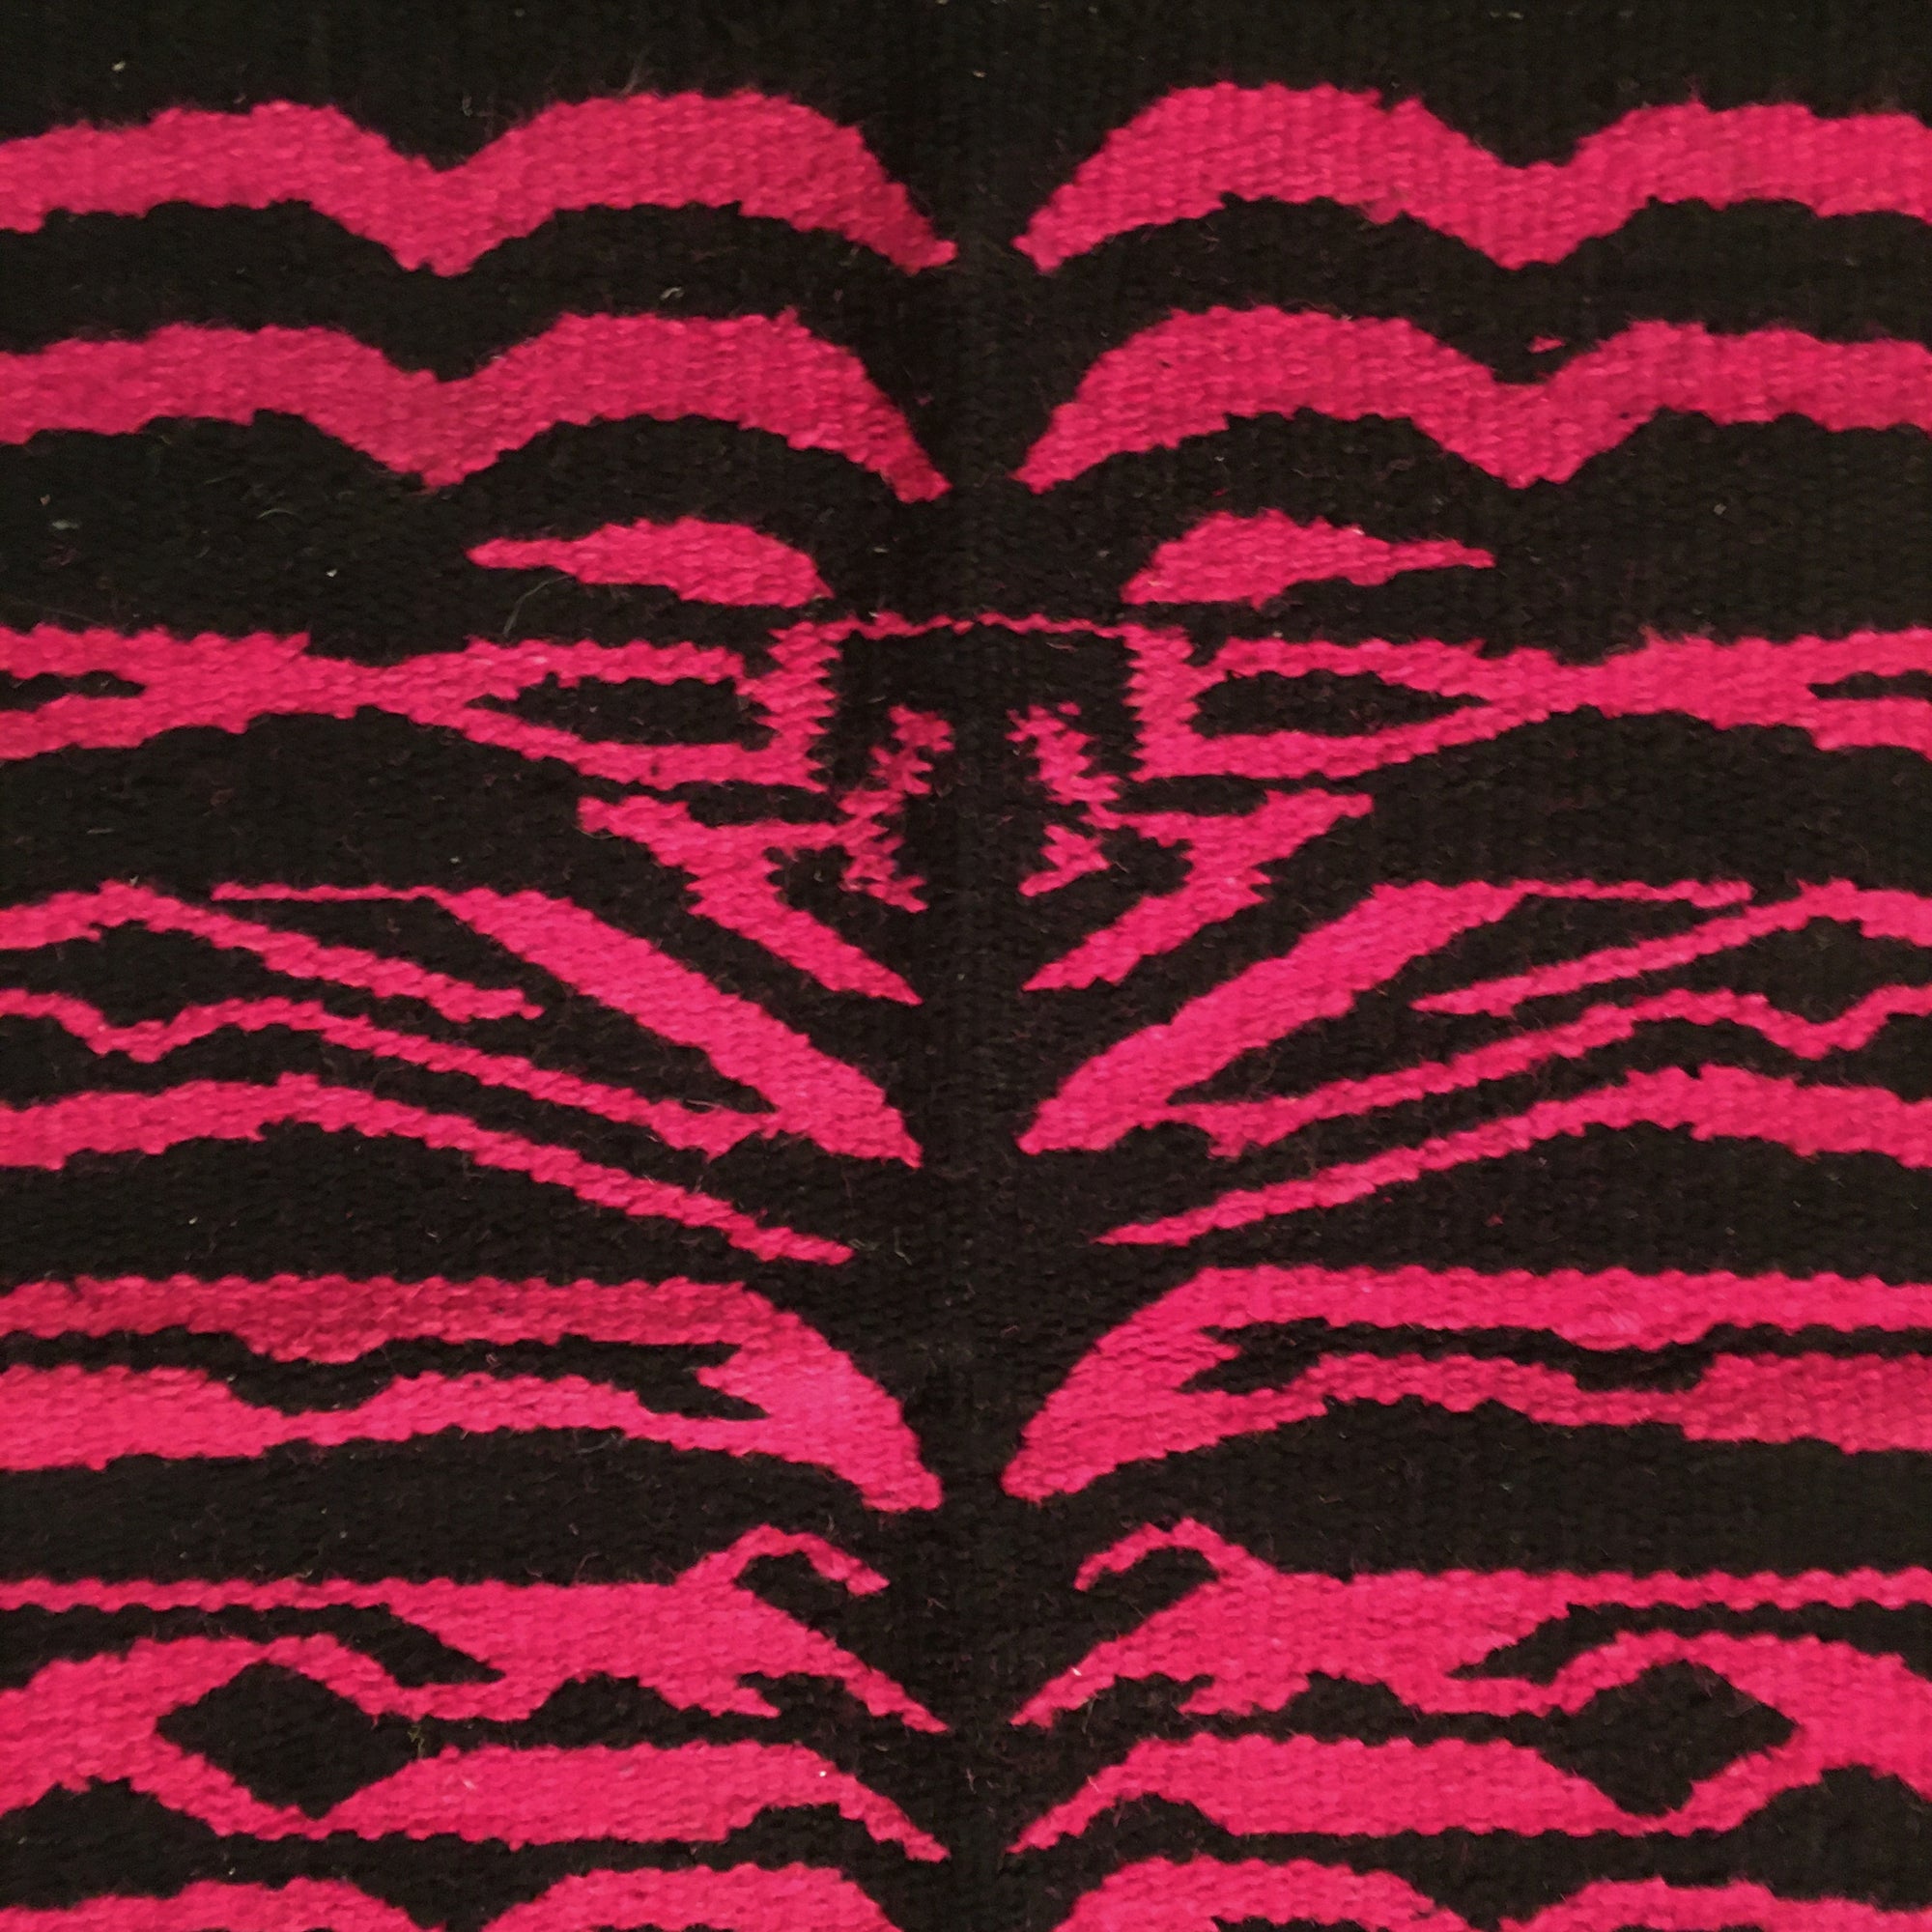 Saddle Blanket Zebra Print Pink Black